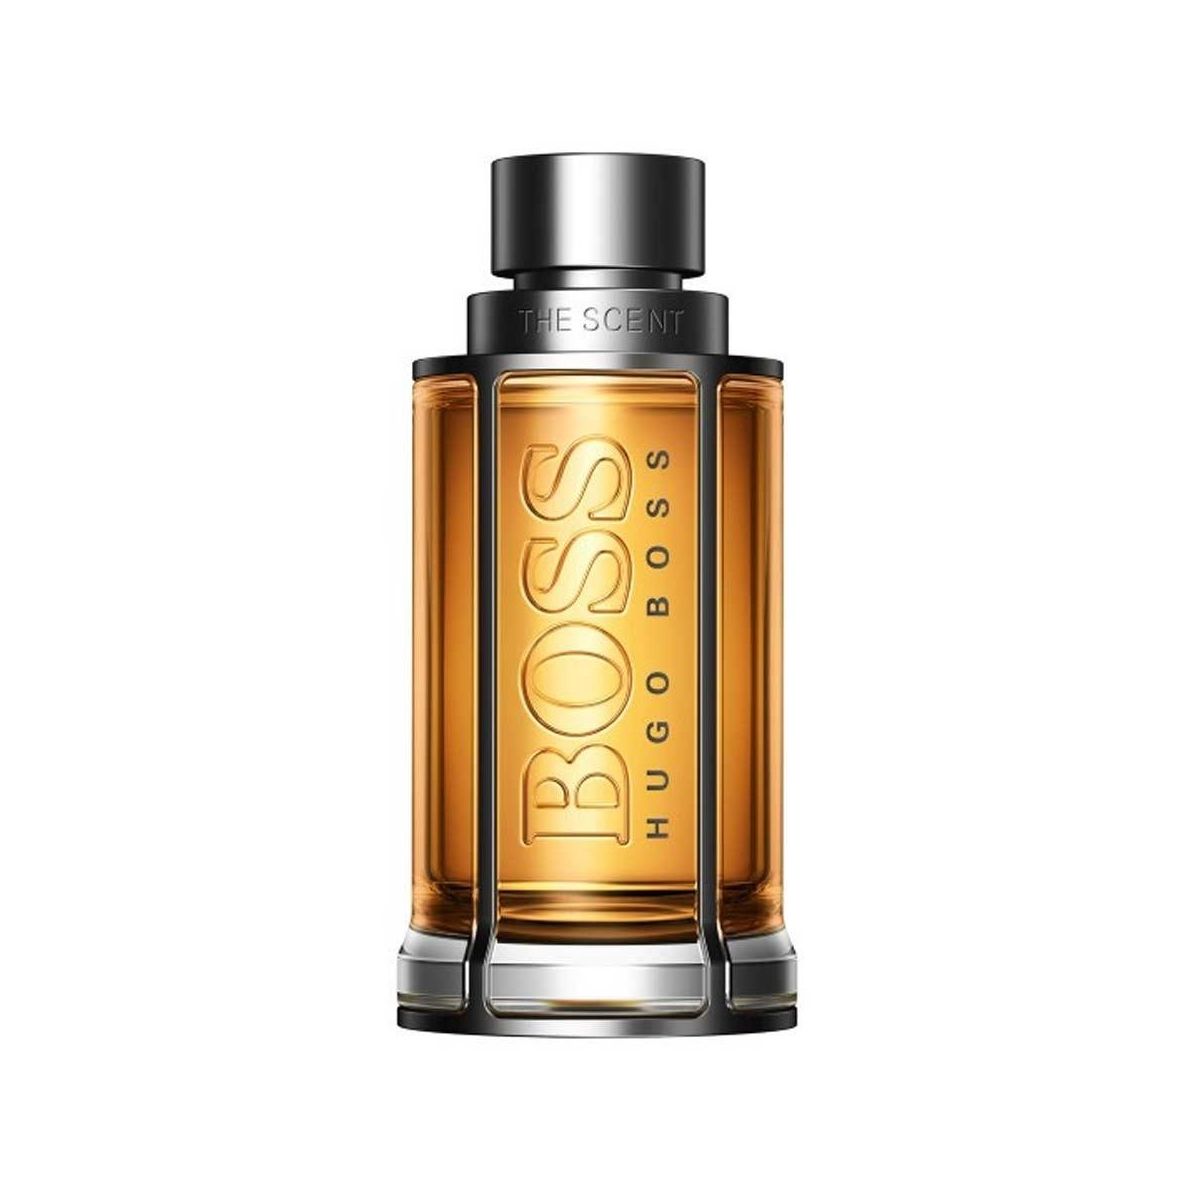 hugo boss parfüm erkek fiyat